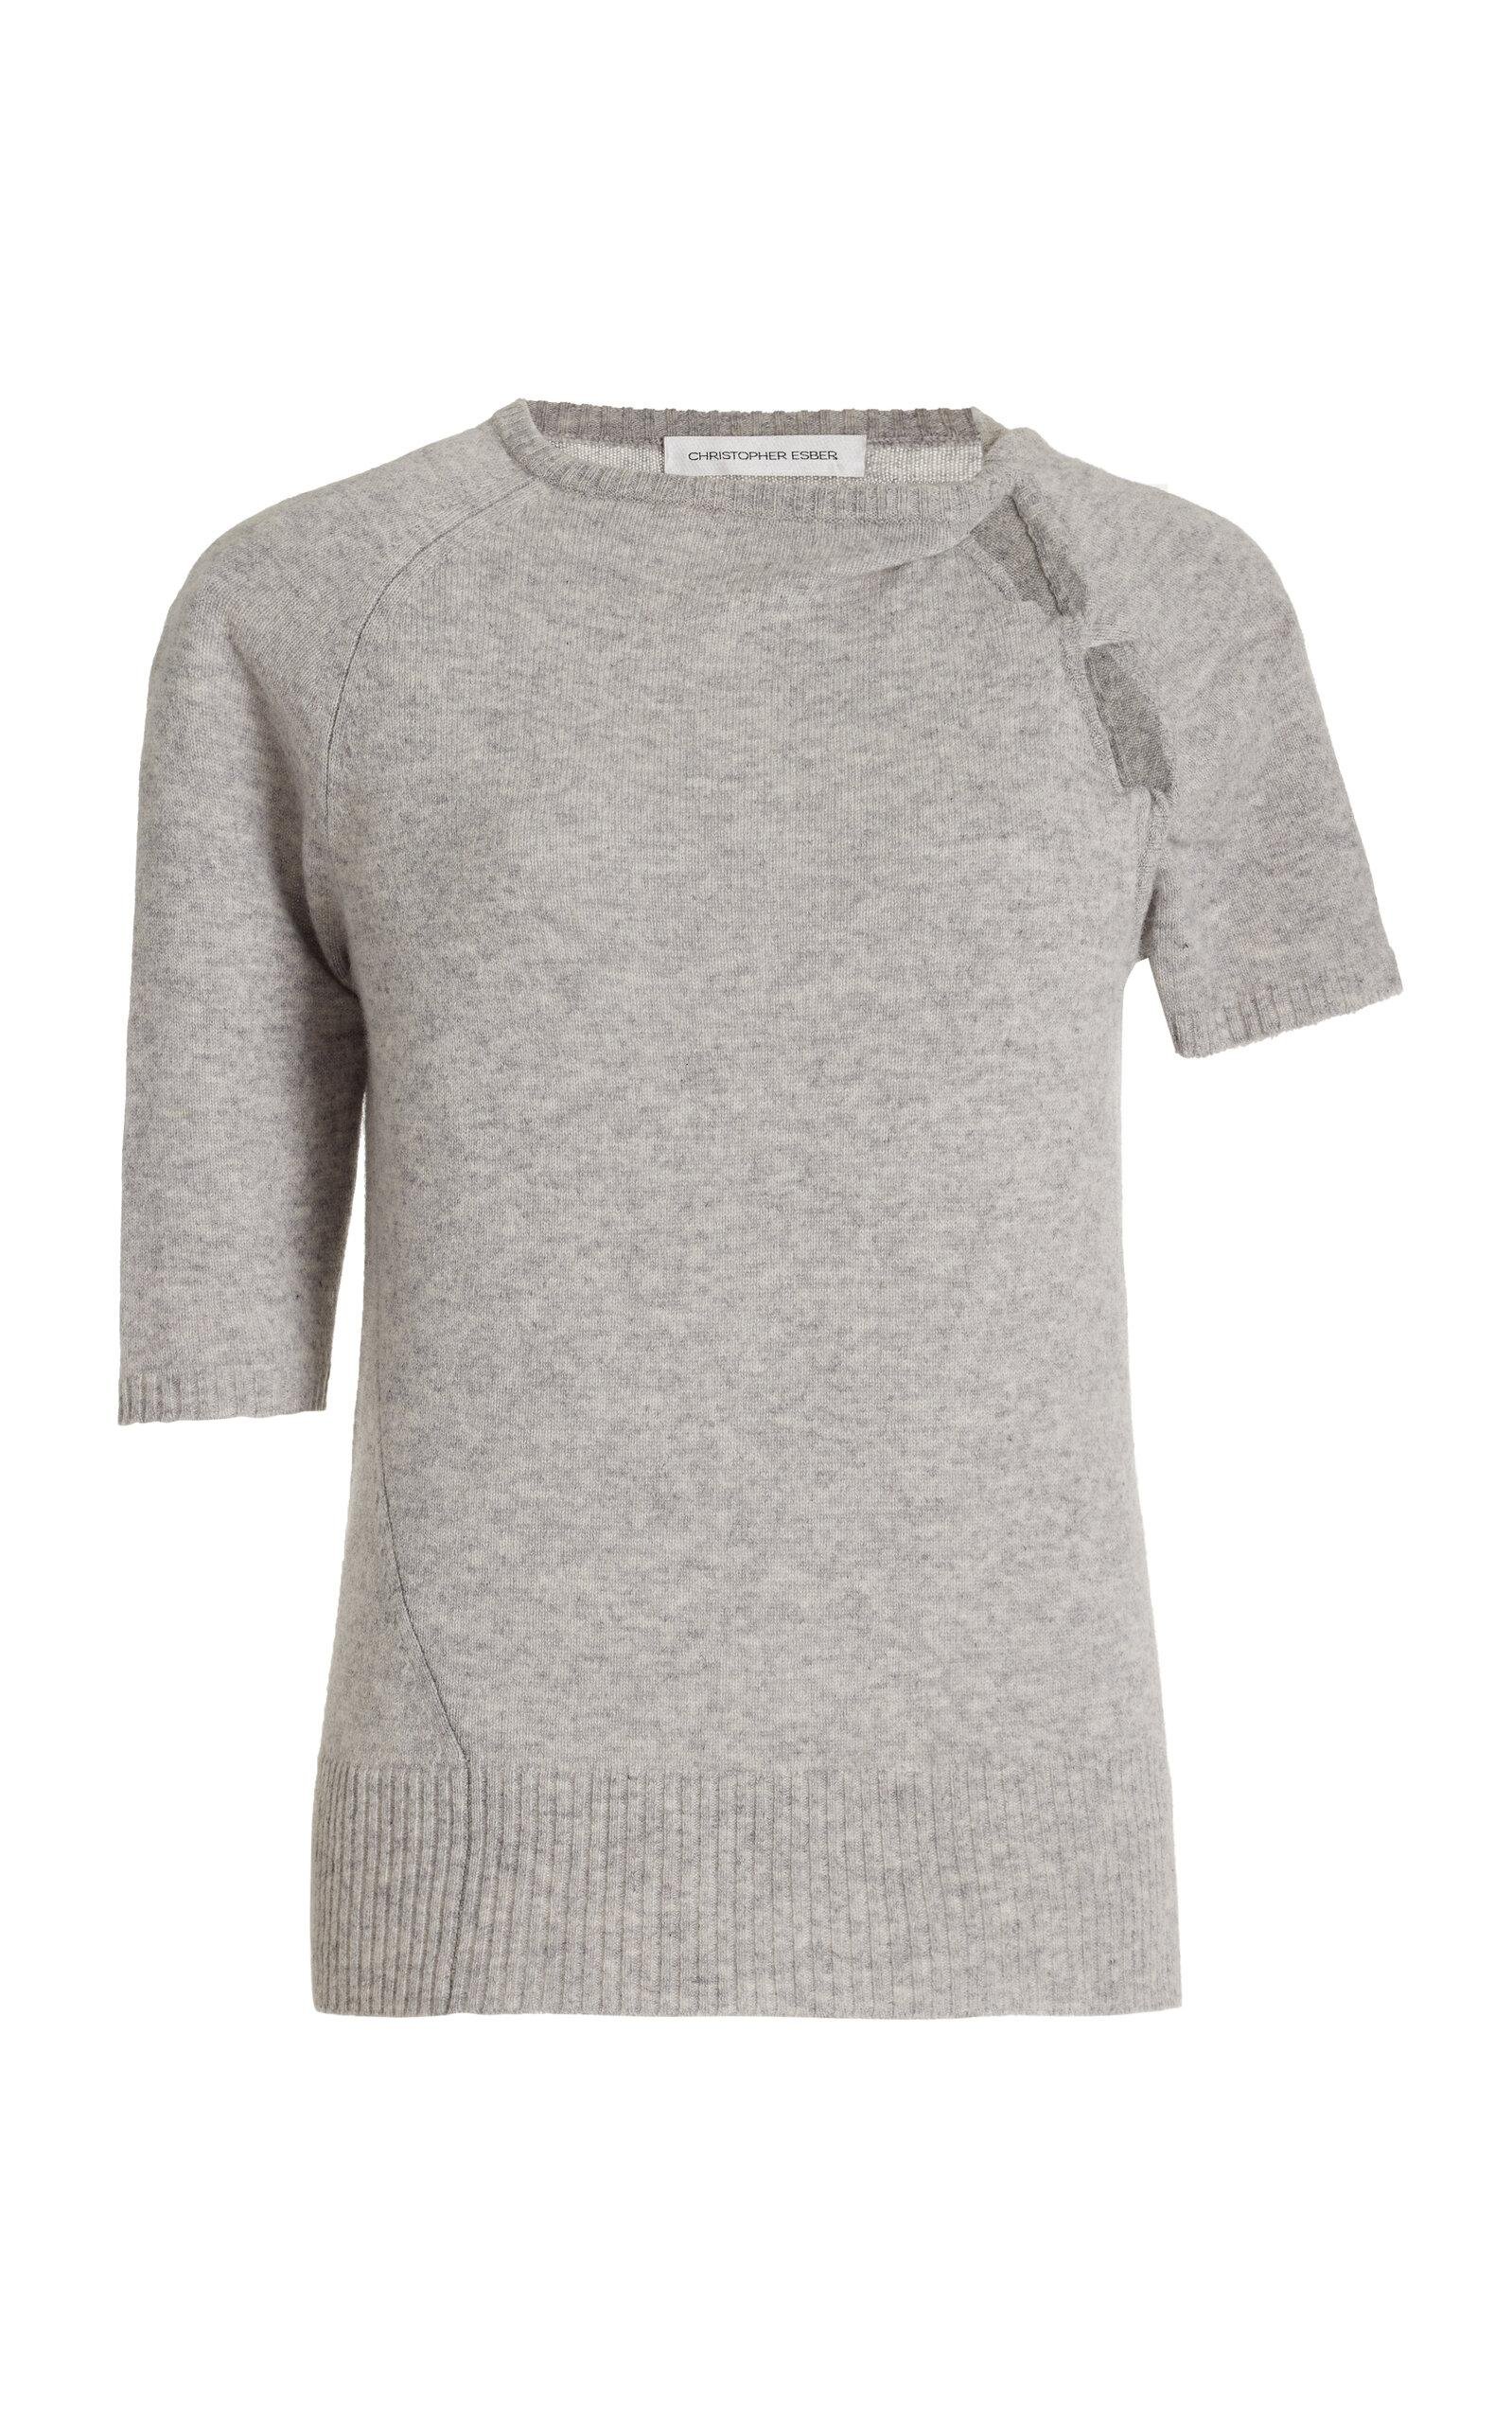 Christopher Esber - Helix Open-Twist Cashmere Sweater - Grey - L - Moda Operandi by CHRISTOPHER ESBER